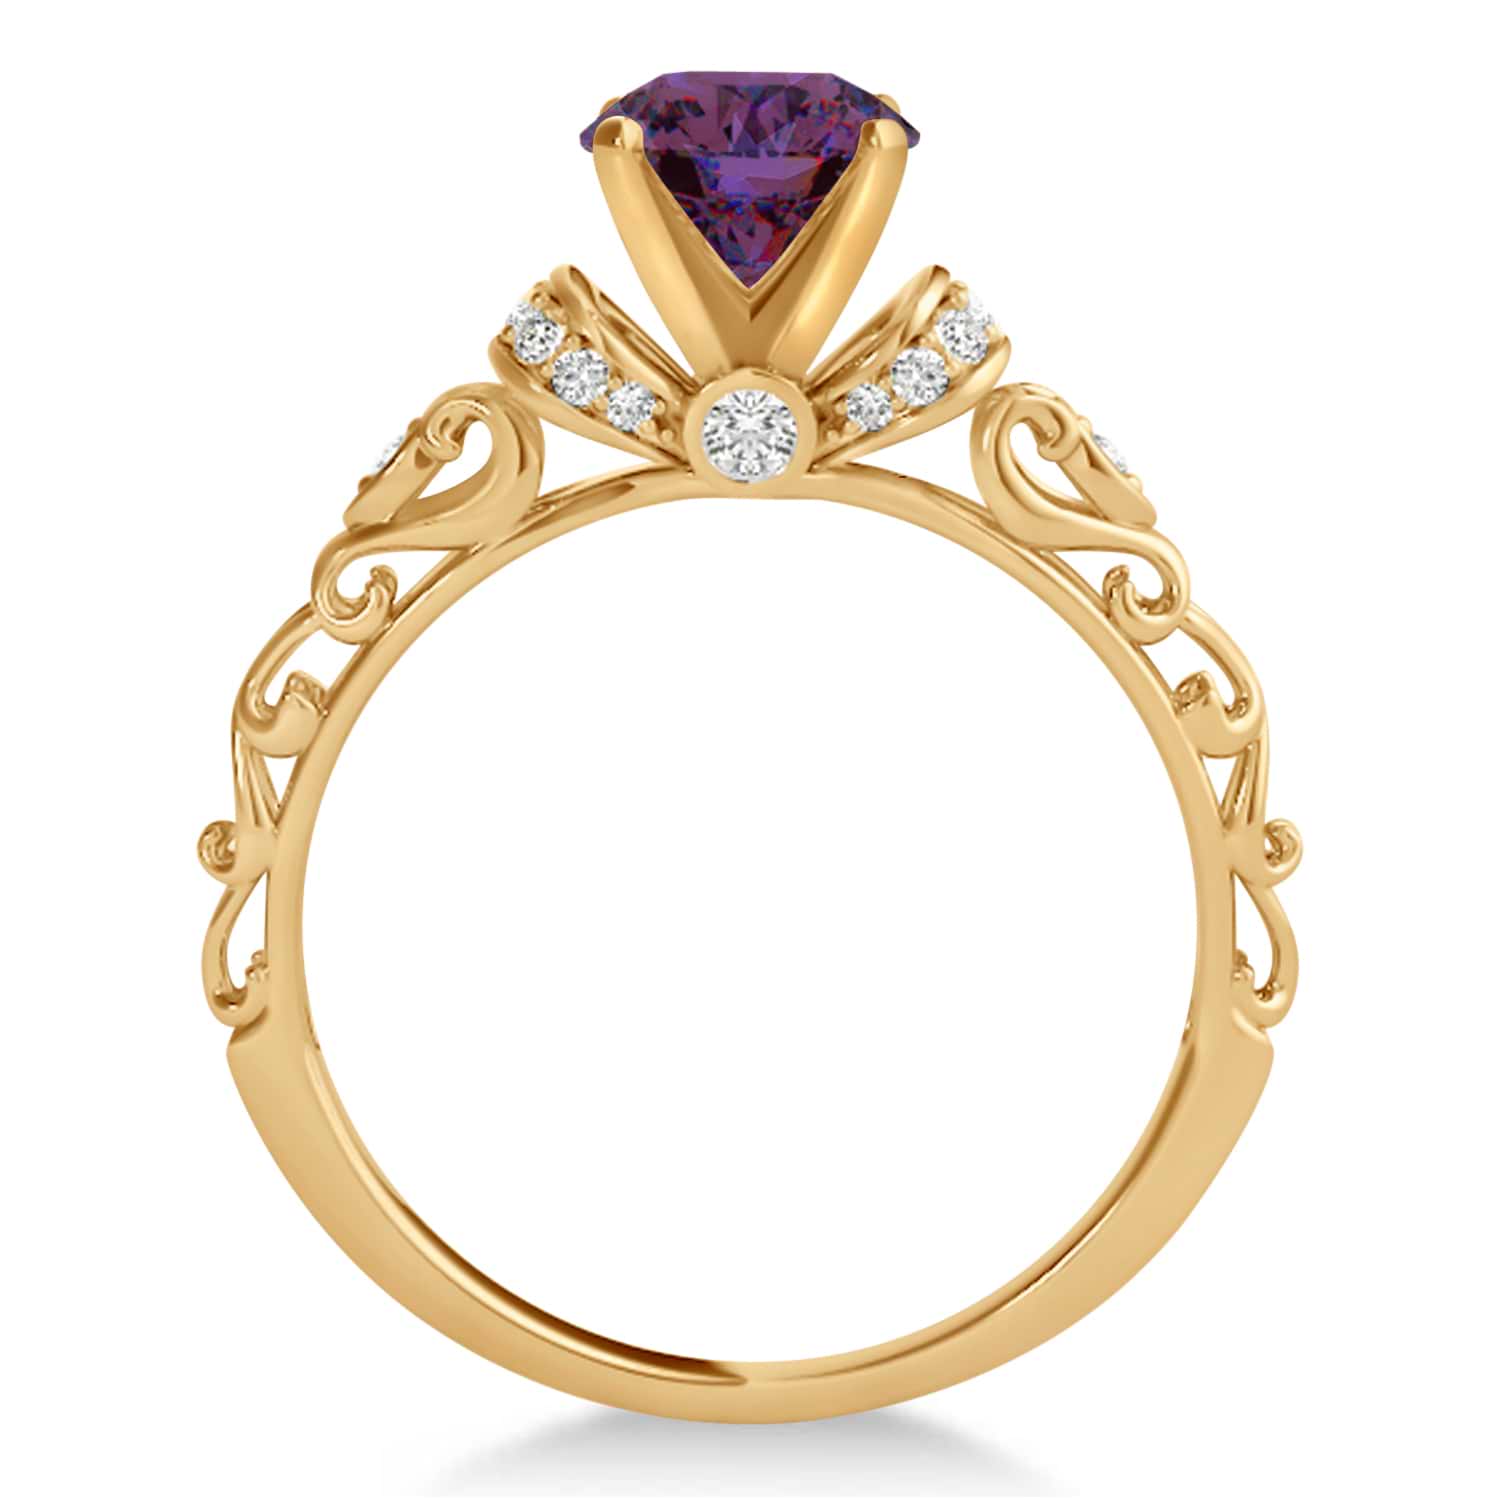 Lab Aleandrite & Diamond Antique Style Engagement Ring 18k Rose Gold (1.62ct)